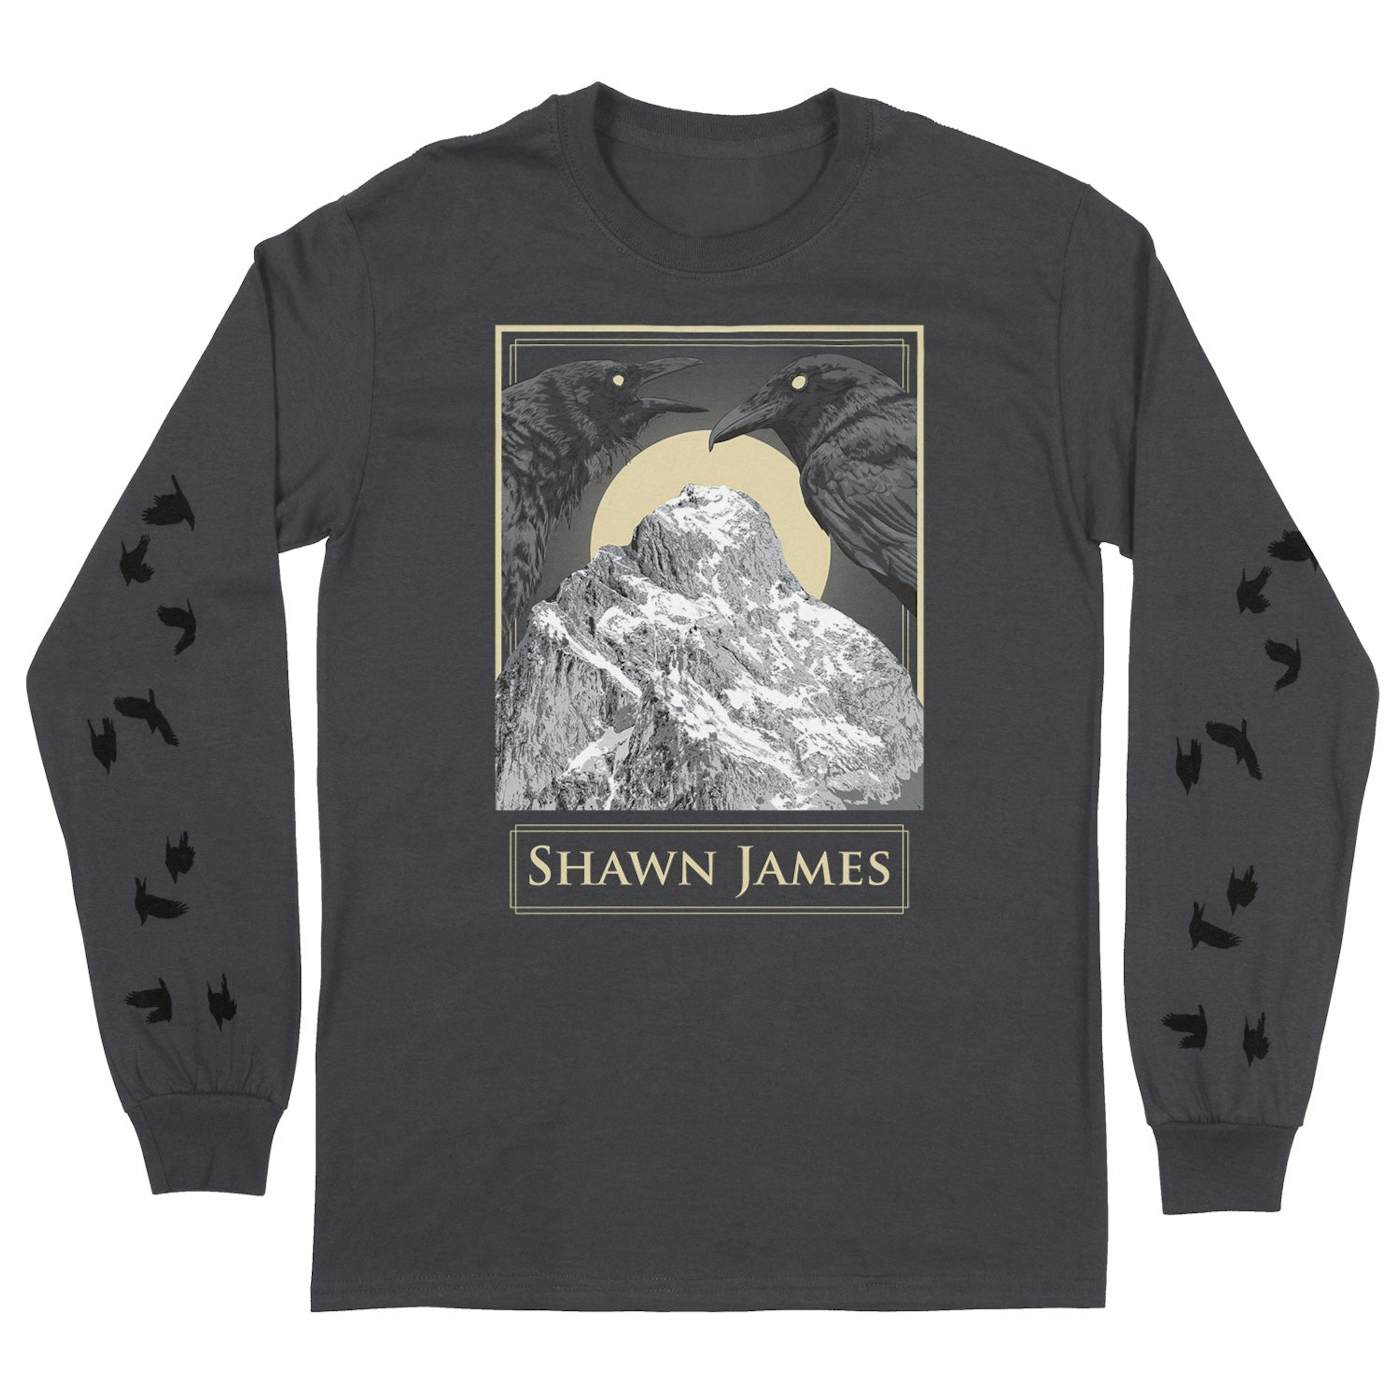 Shawn James "Mountain Crow" Longsleeve